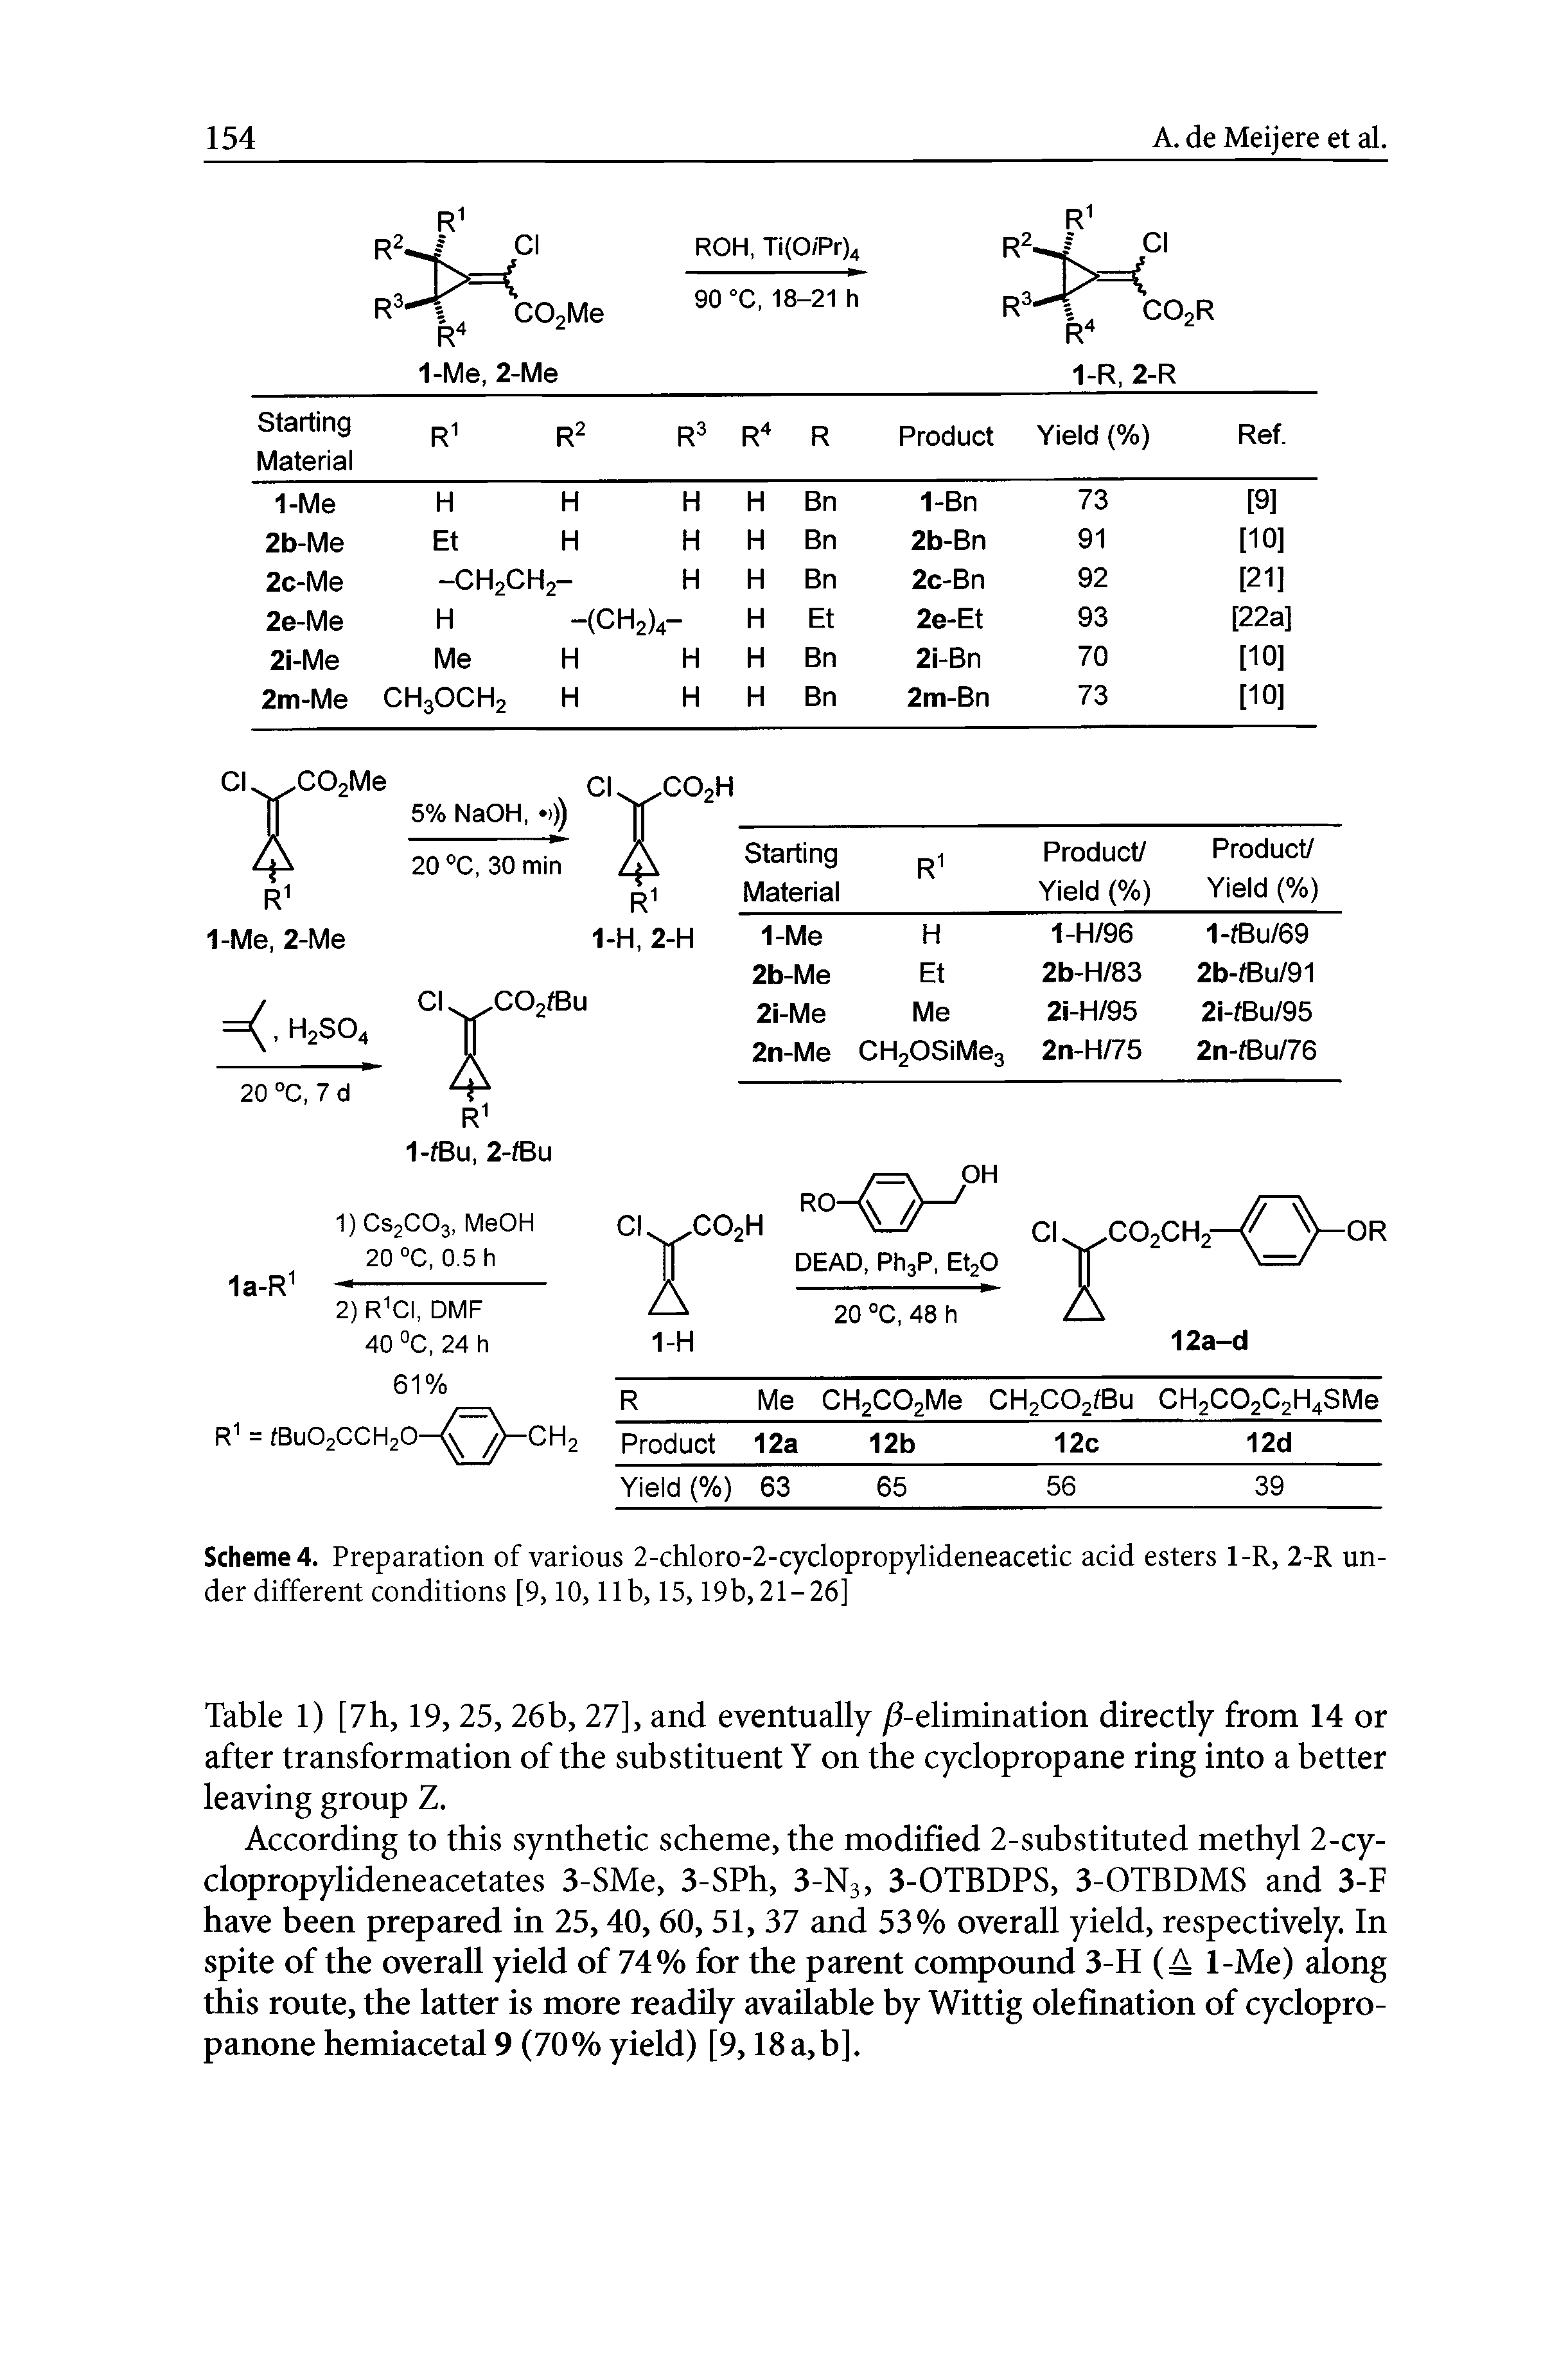 Scheme 4. Preparation of various 2-chloro-2-cyclopropylideneacetic acid esters 1-R, 2-R under different conditions [9,10,11b, 15,19b,21-26]...